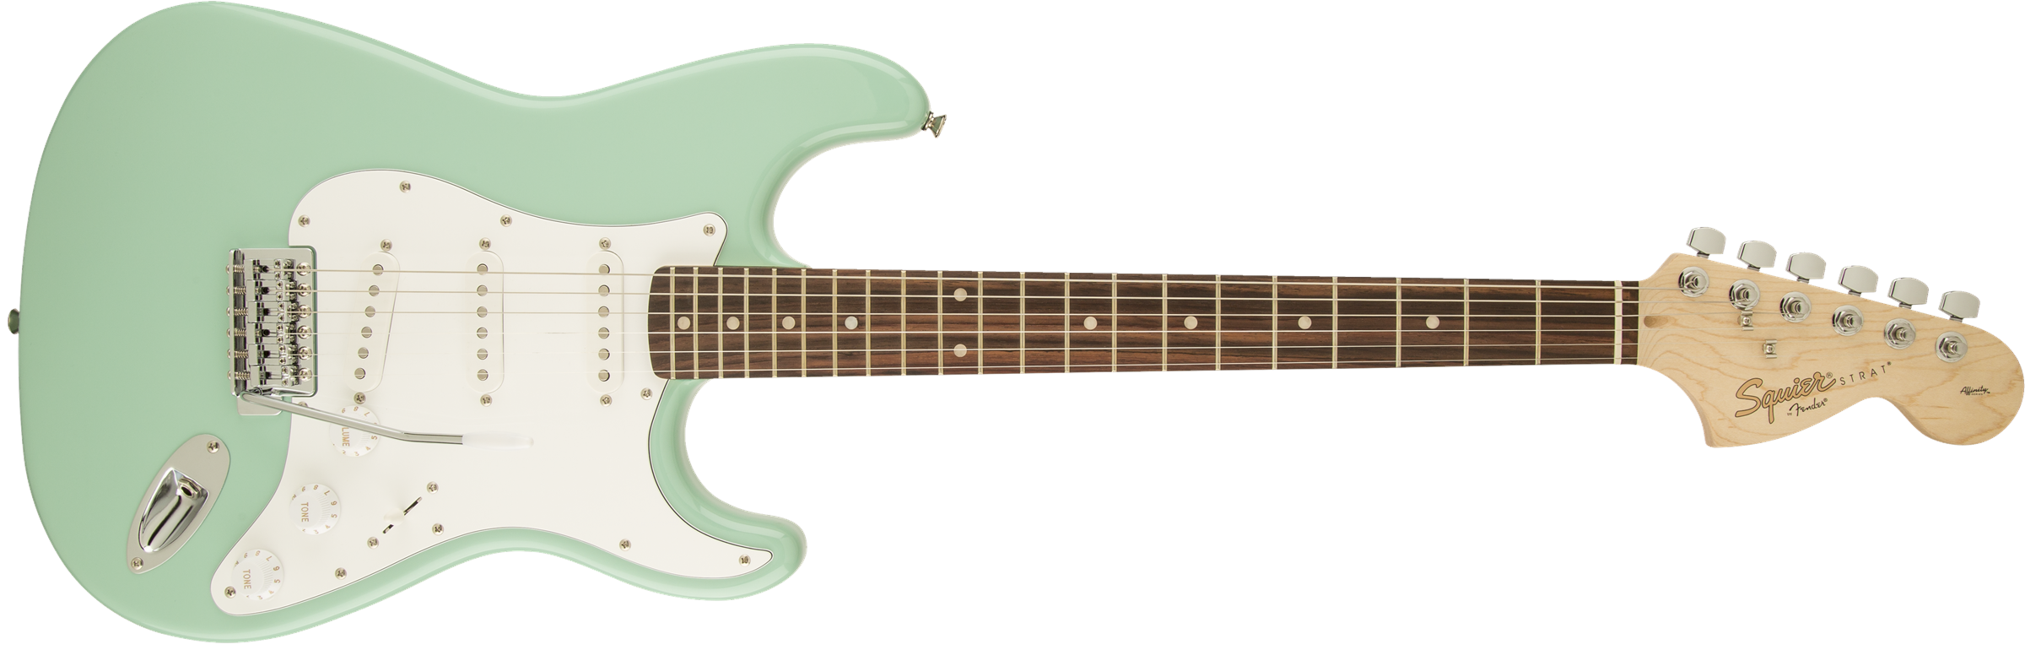 Squier By Fender - Affinity Stratocaster - Elektrisk Guitar (Surf Green)